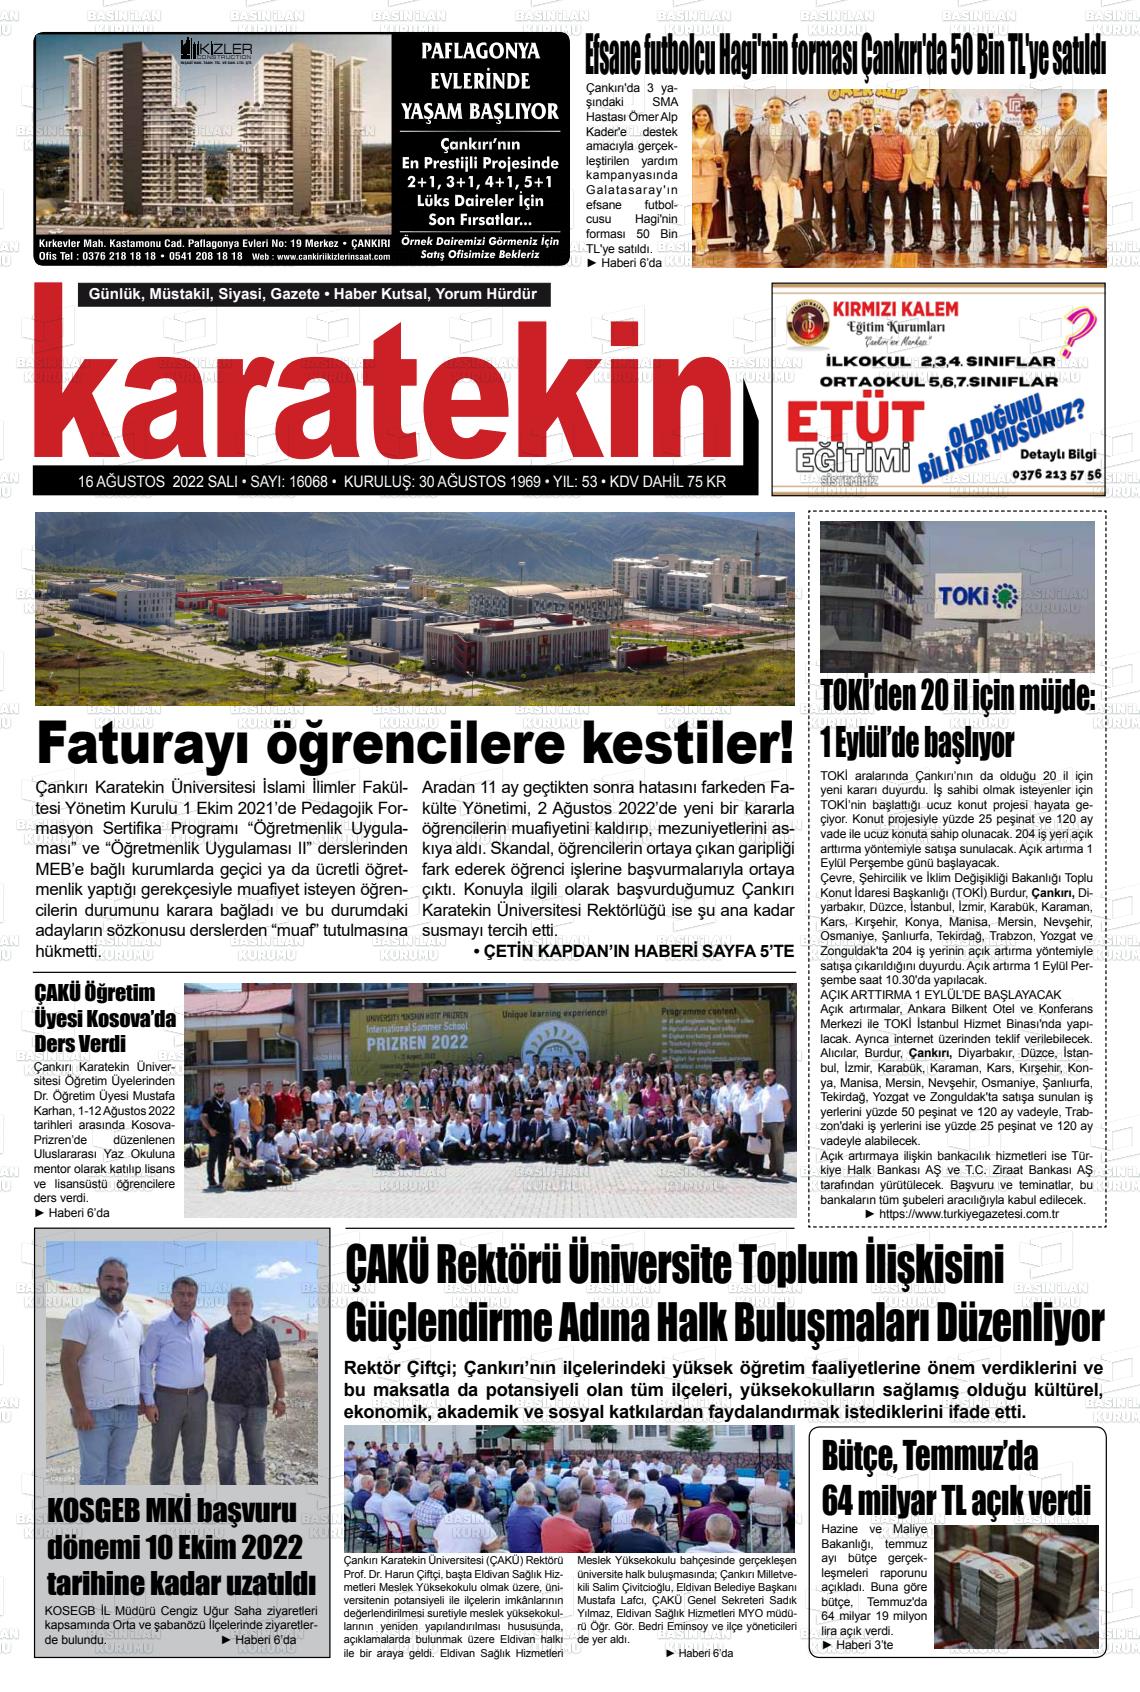 16 Ağustos 2022 Karatekin Gazete Manşeti